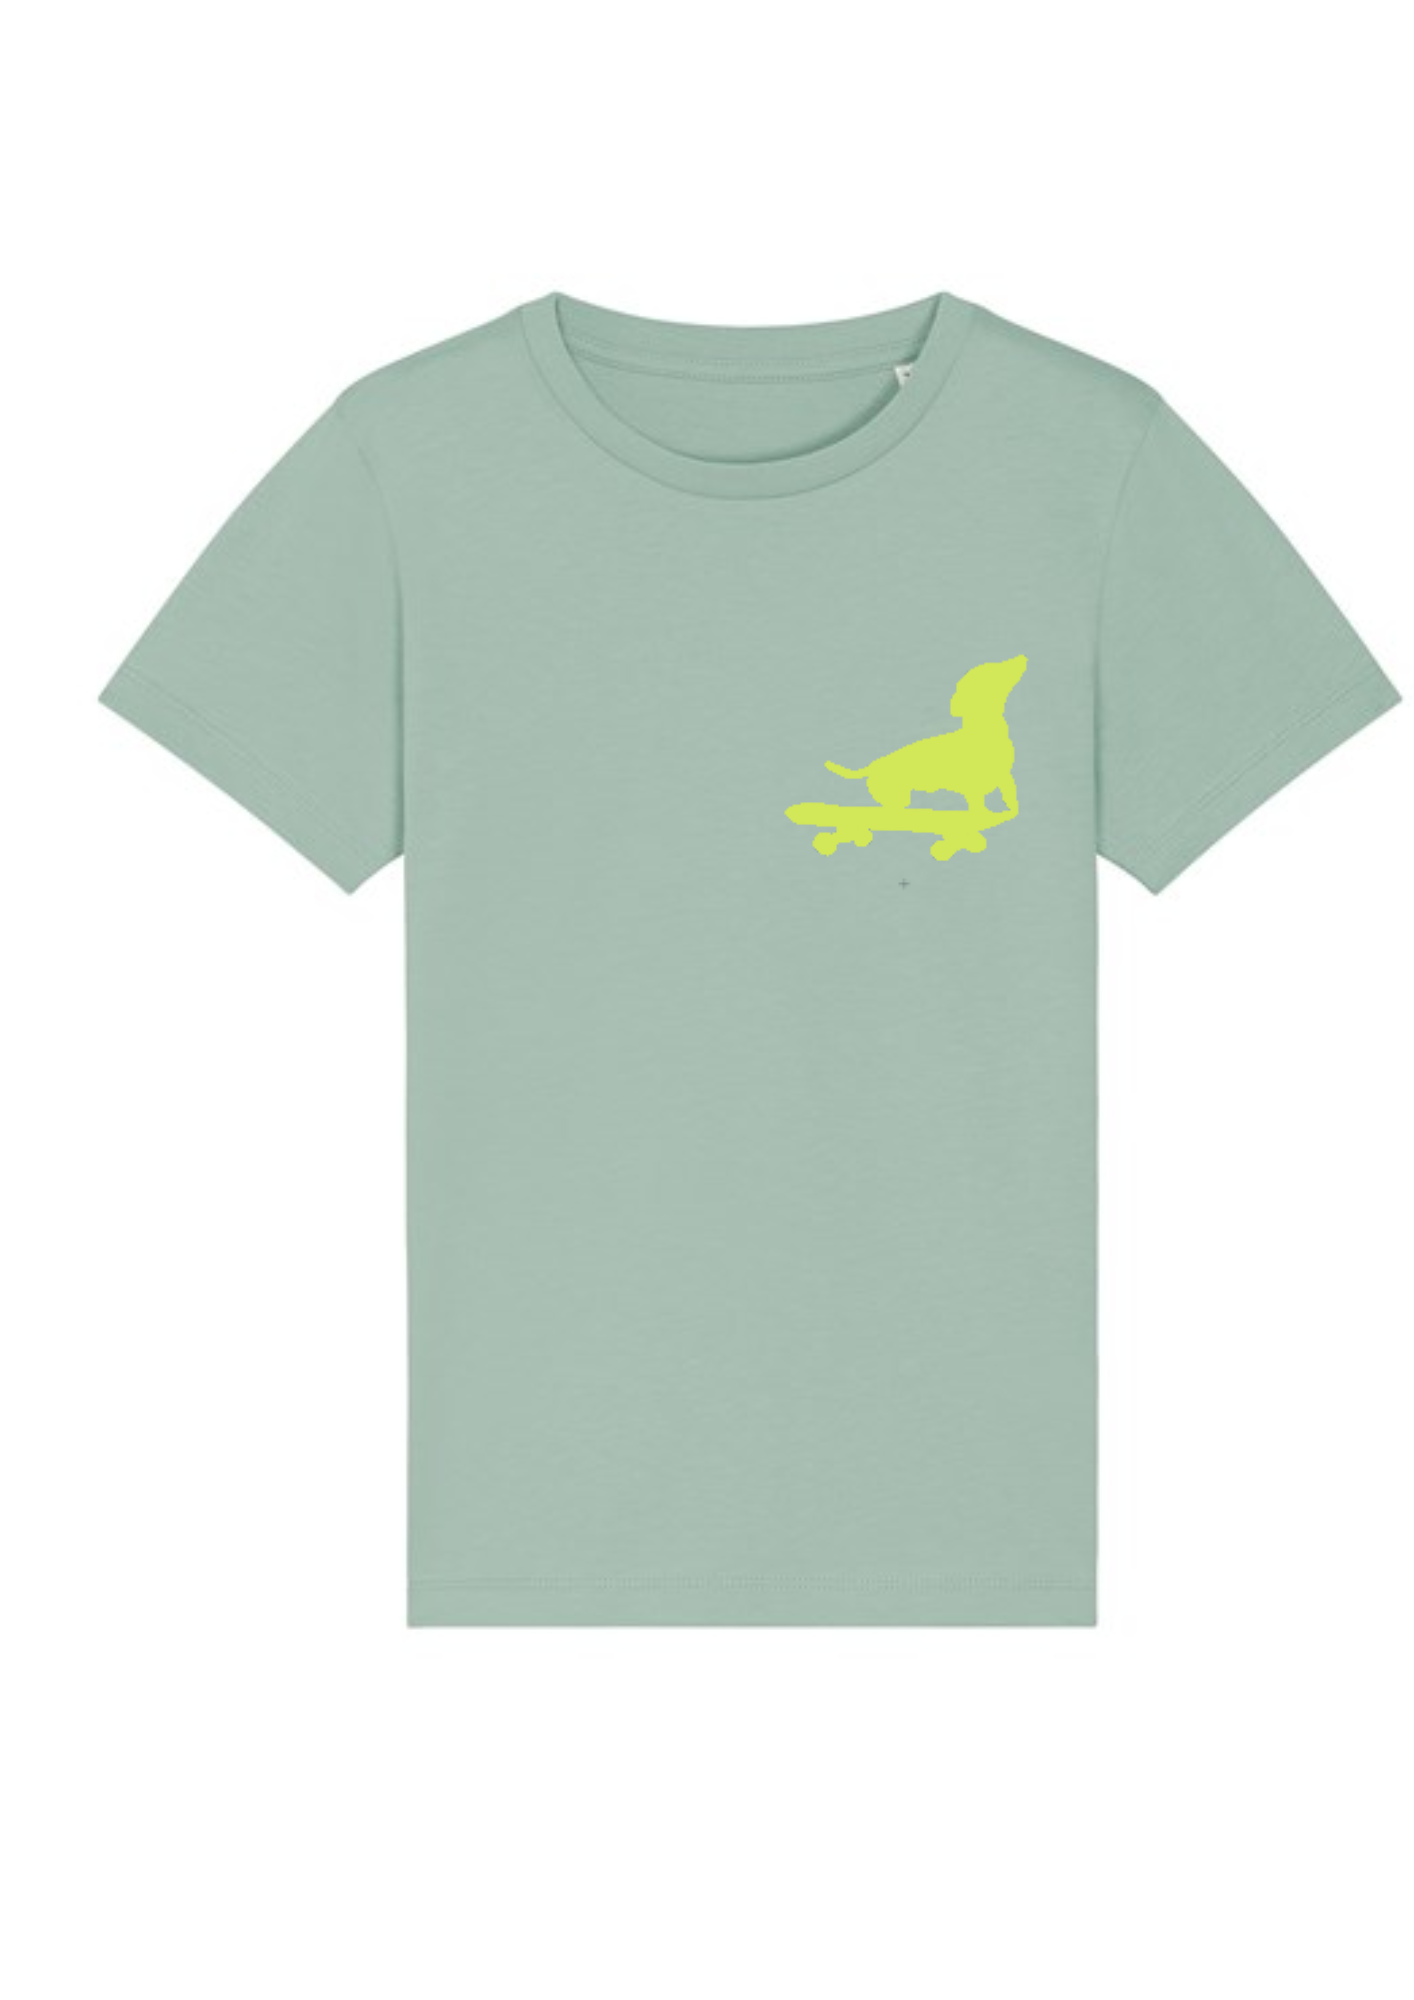 Small Dog on Skateboard T shirt // Aloe and Lemon